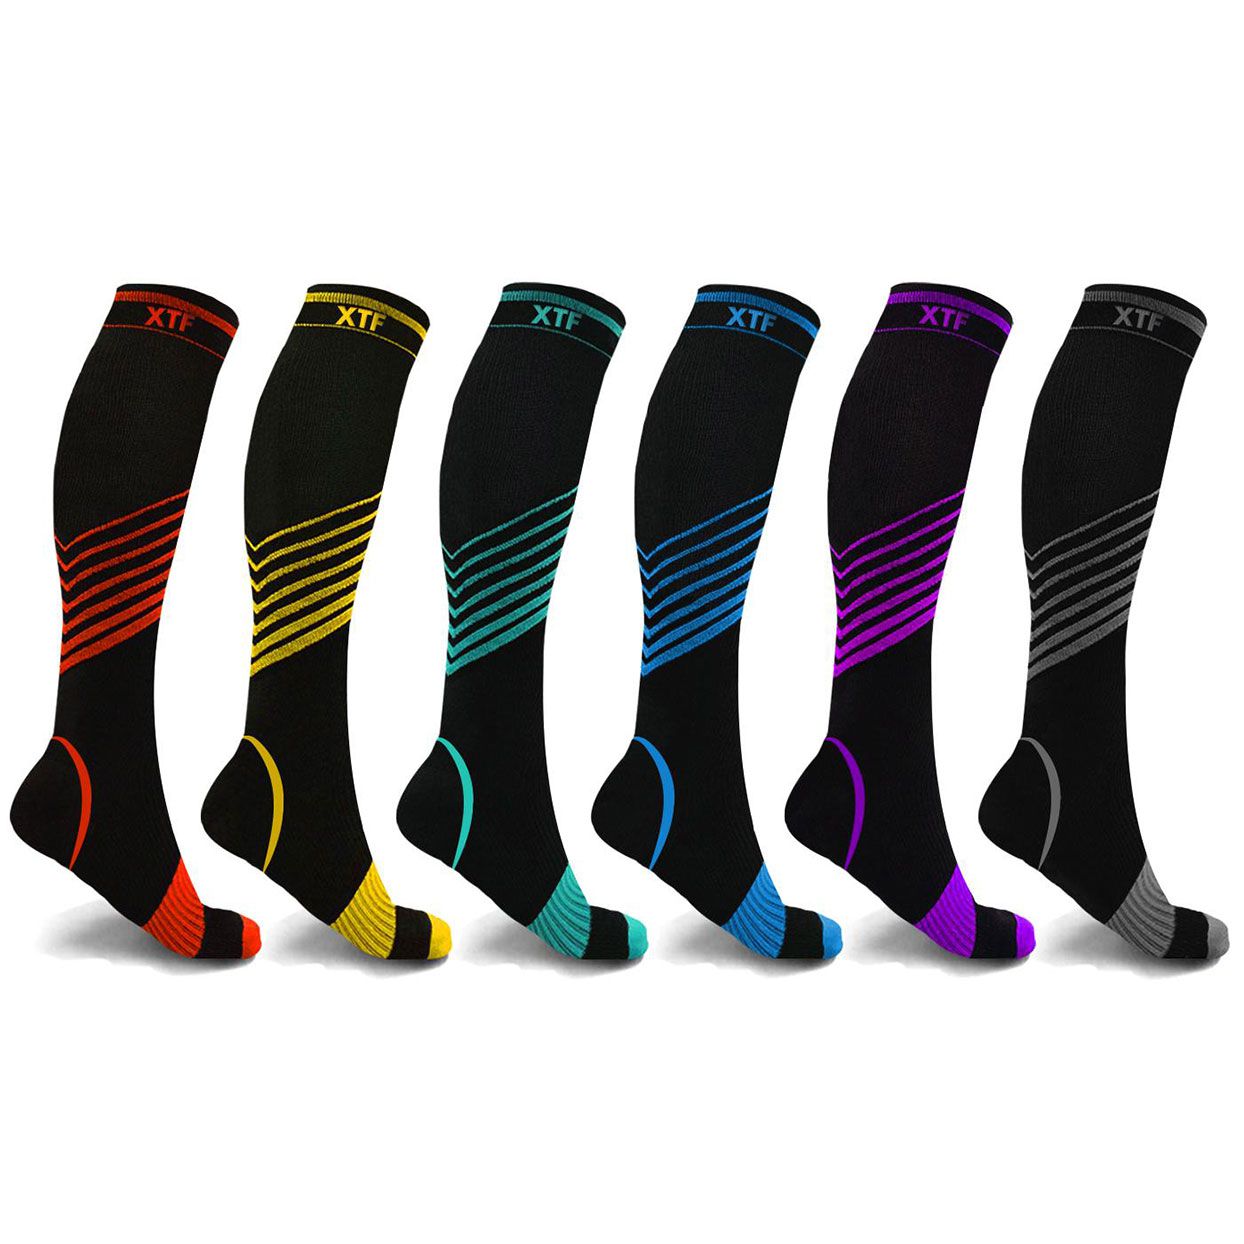 50cm for Sports Puzzling World in The Head Design Elastic Blend Long Socks Compression Knee High Socks 